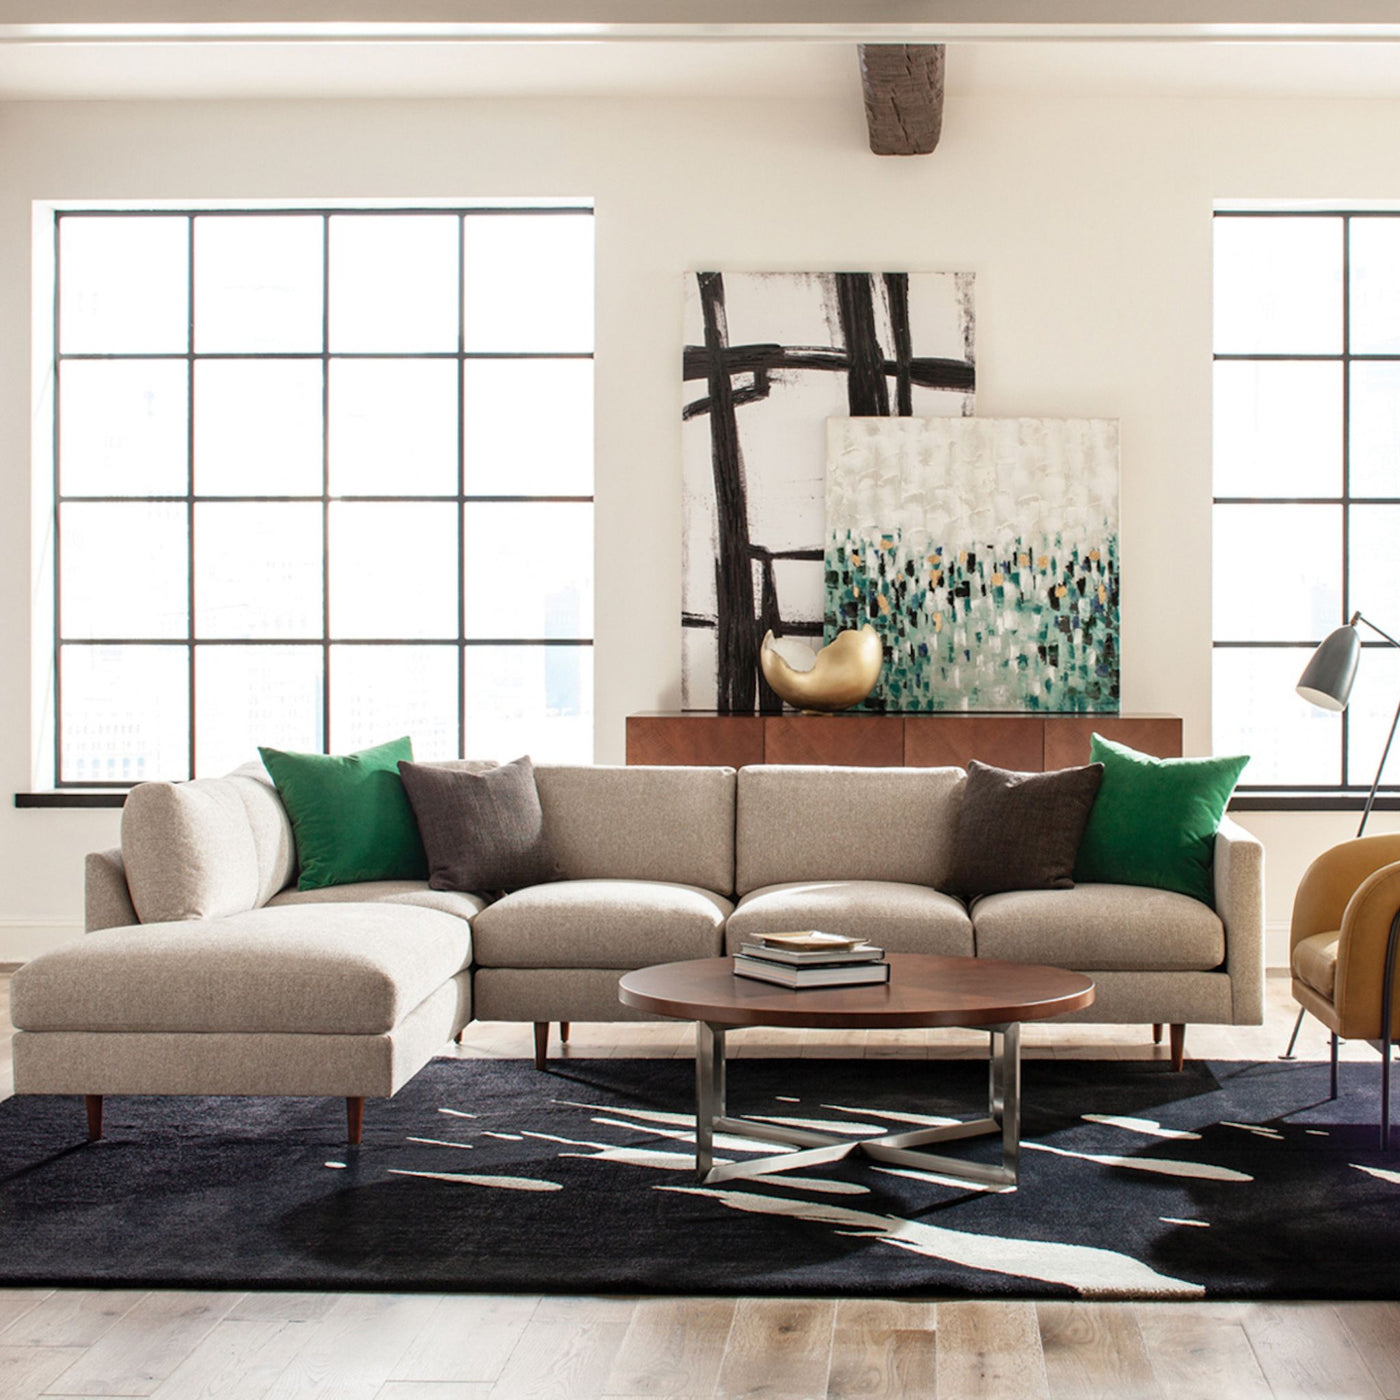 Thayer Coggin Milo Baughman Design Classic Sectional Sofa in Living Room with GUBI Grasshopper Lamp